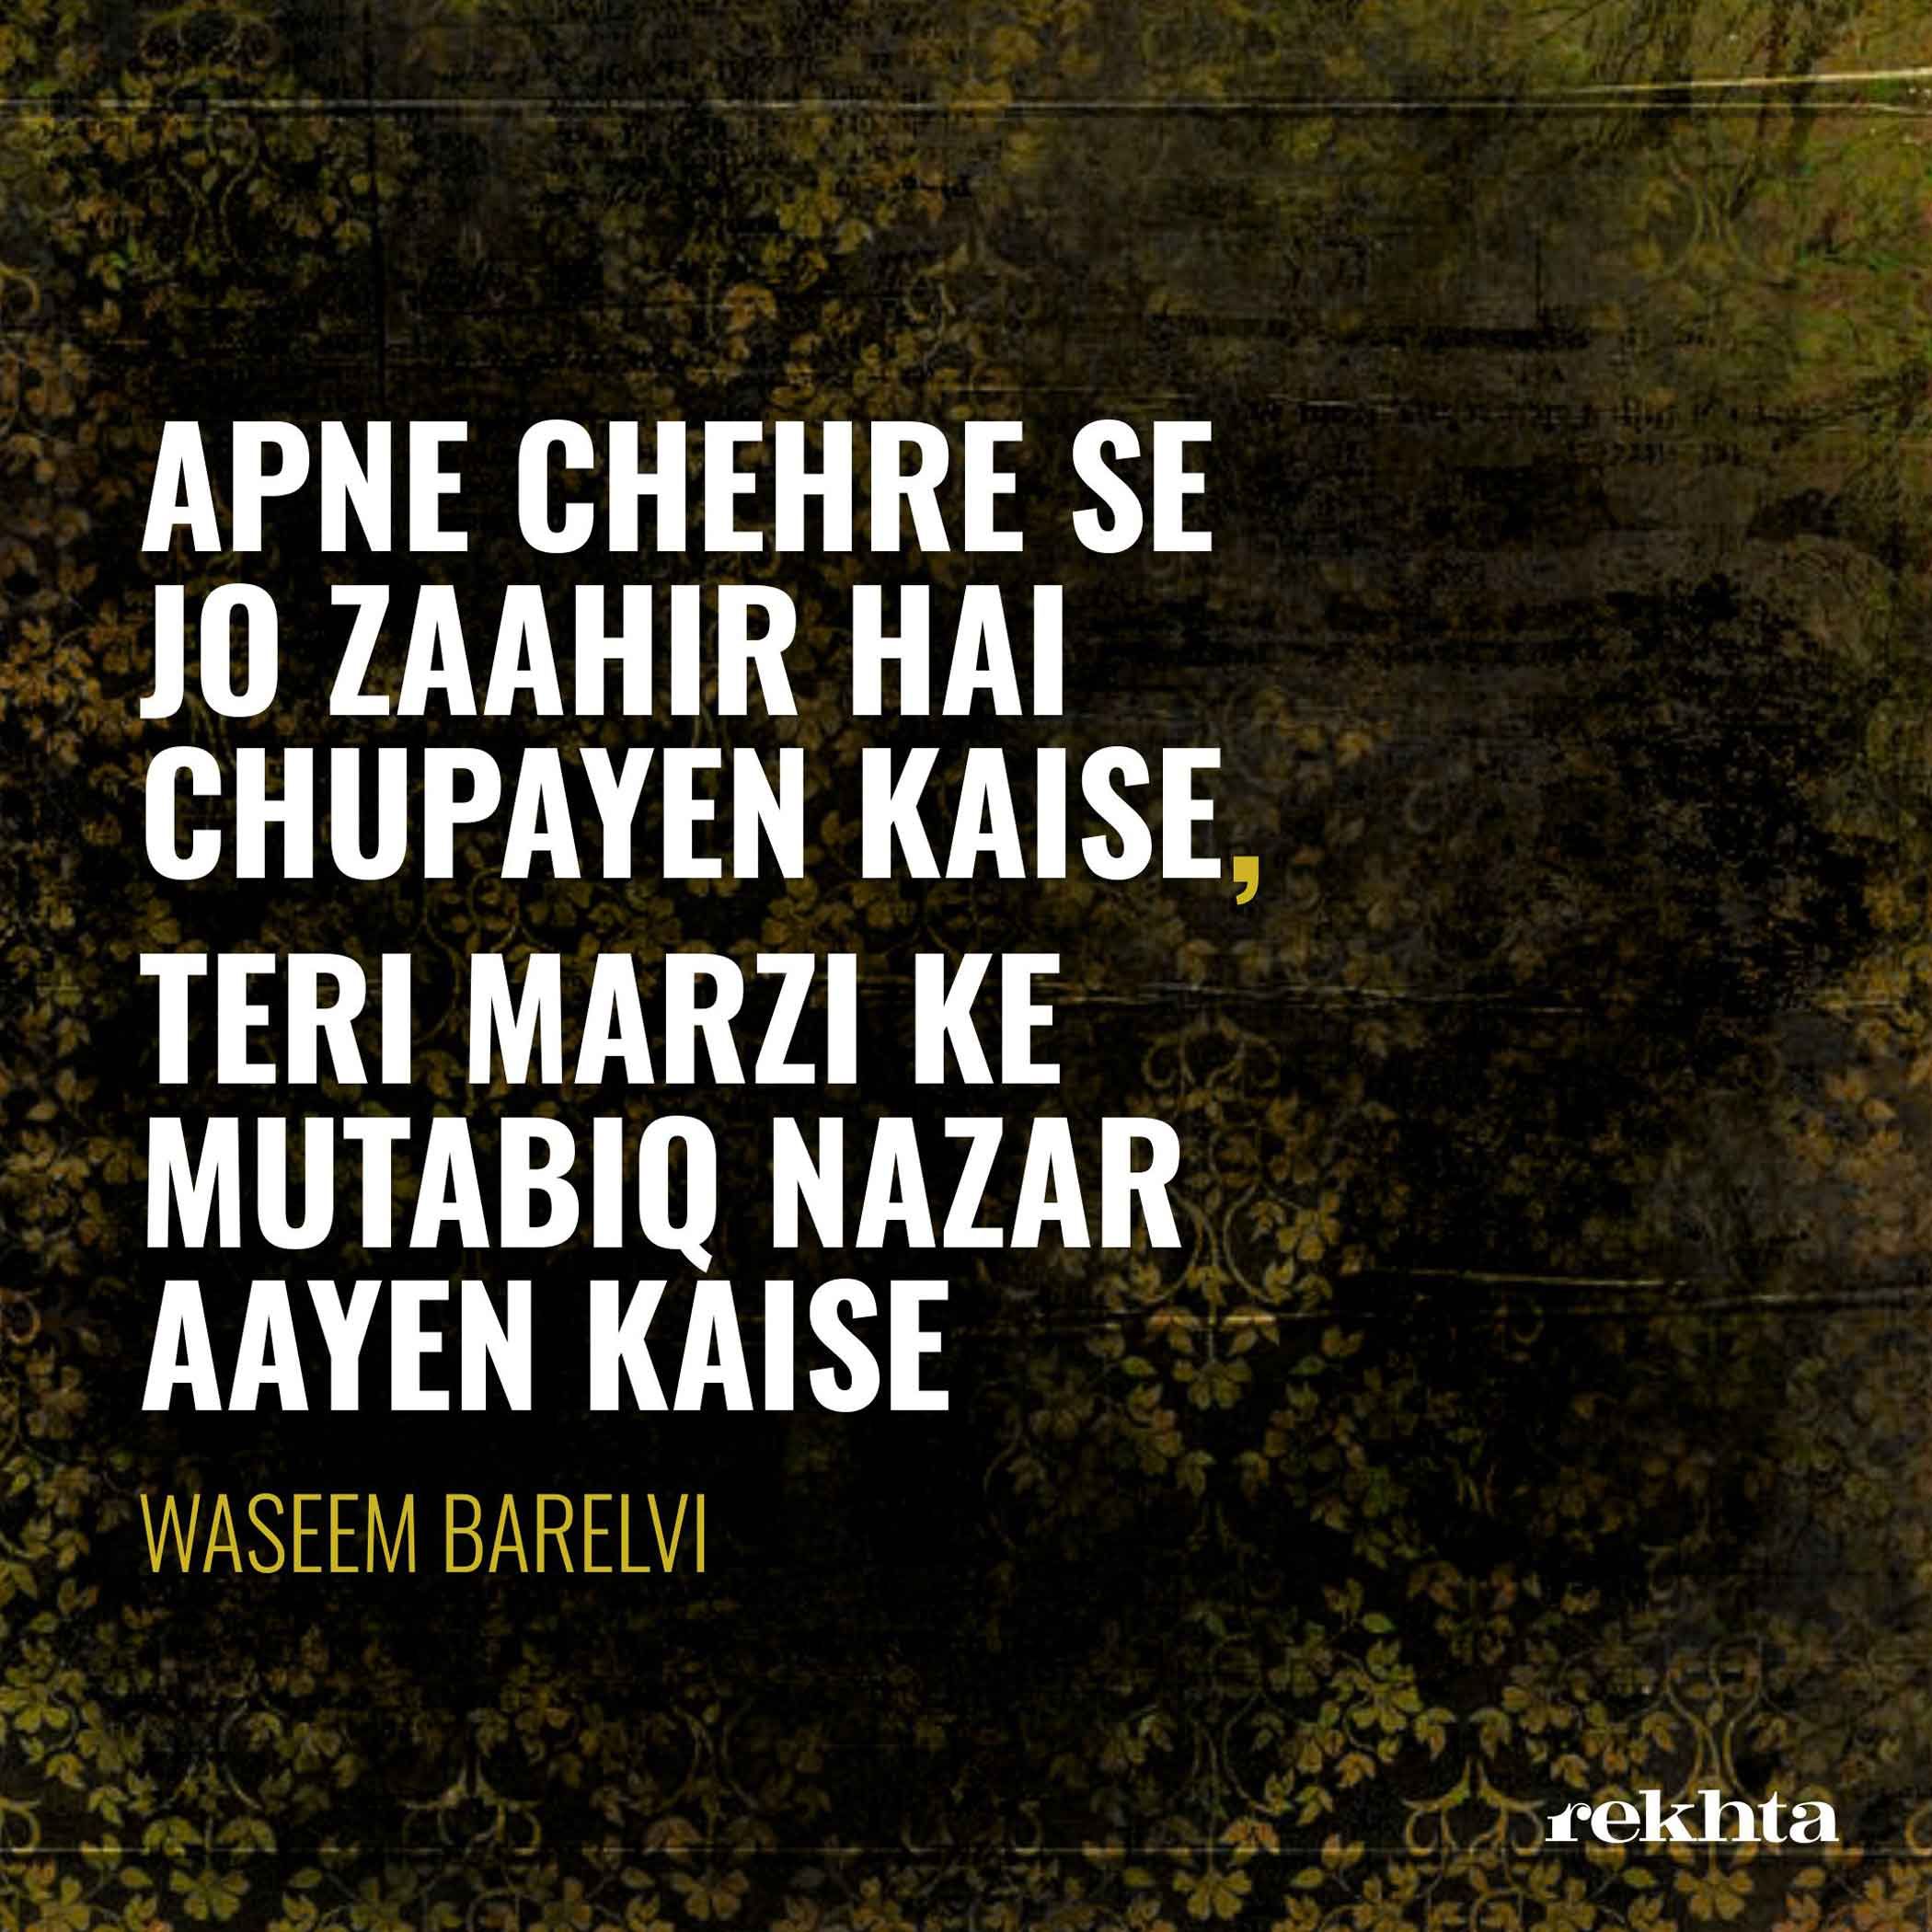 Waseem Barelvi